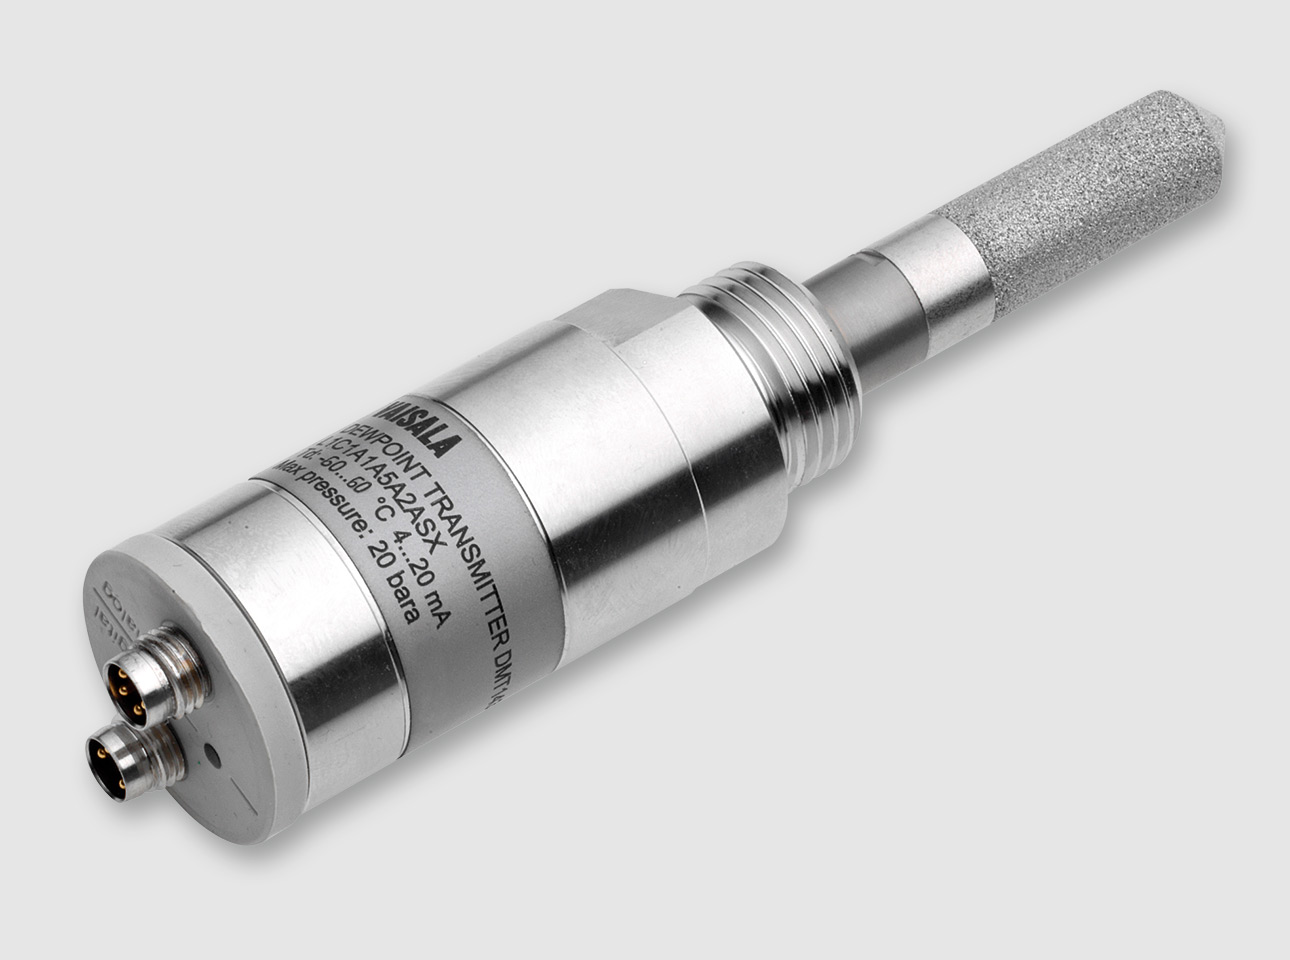 VAISALADRYCAP®DEWPORT发射器DMT143是一种微型露点测量仪器